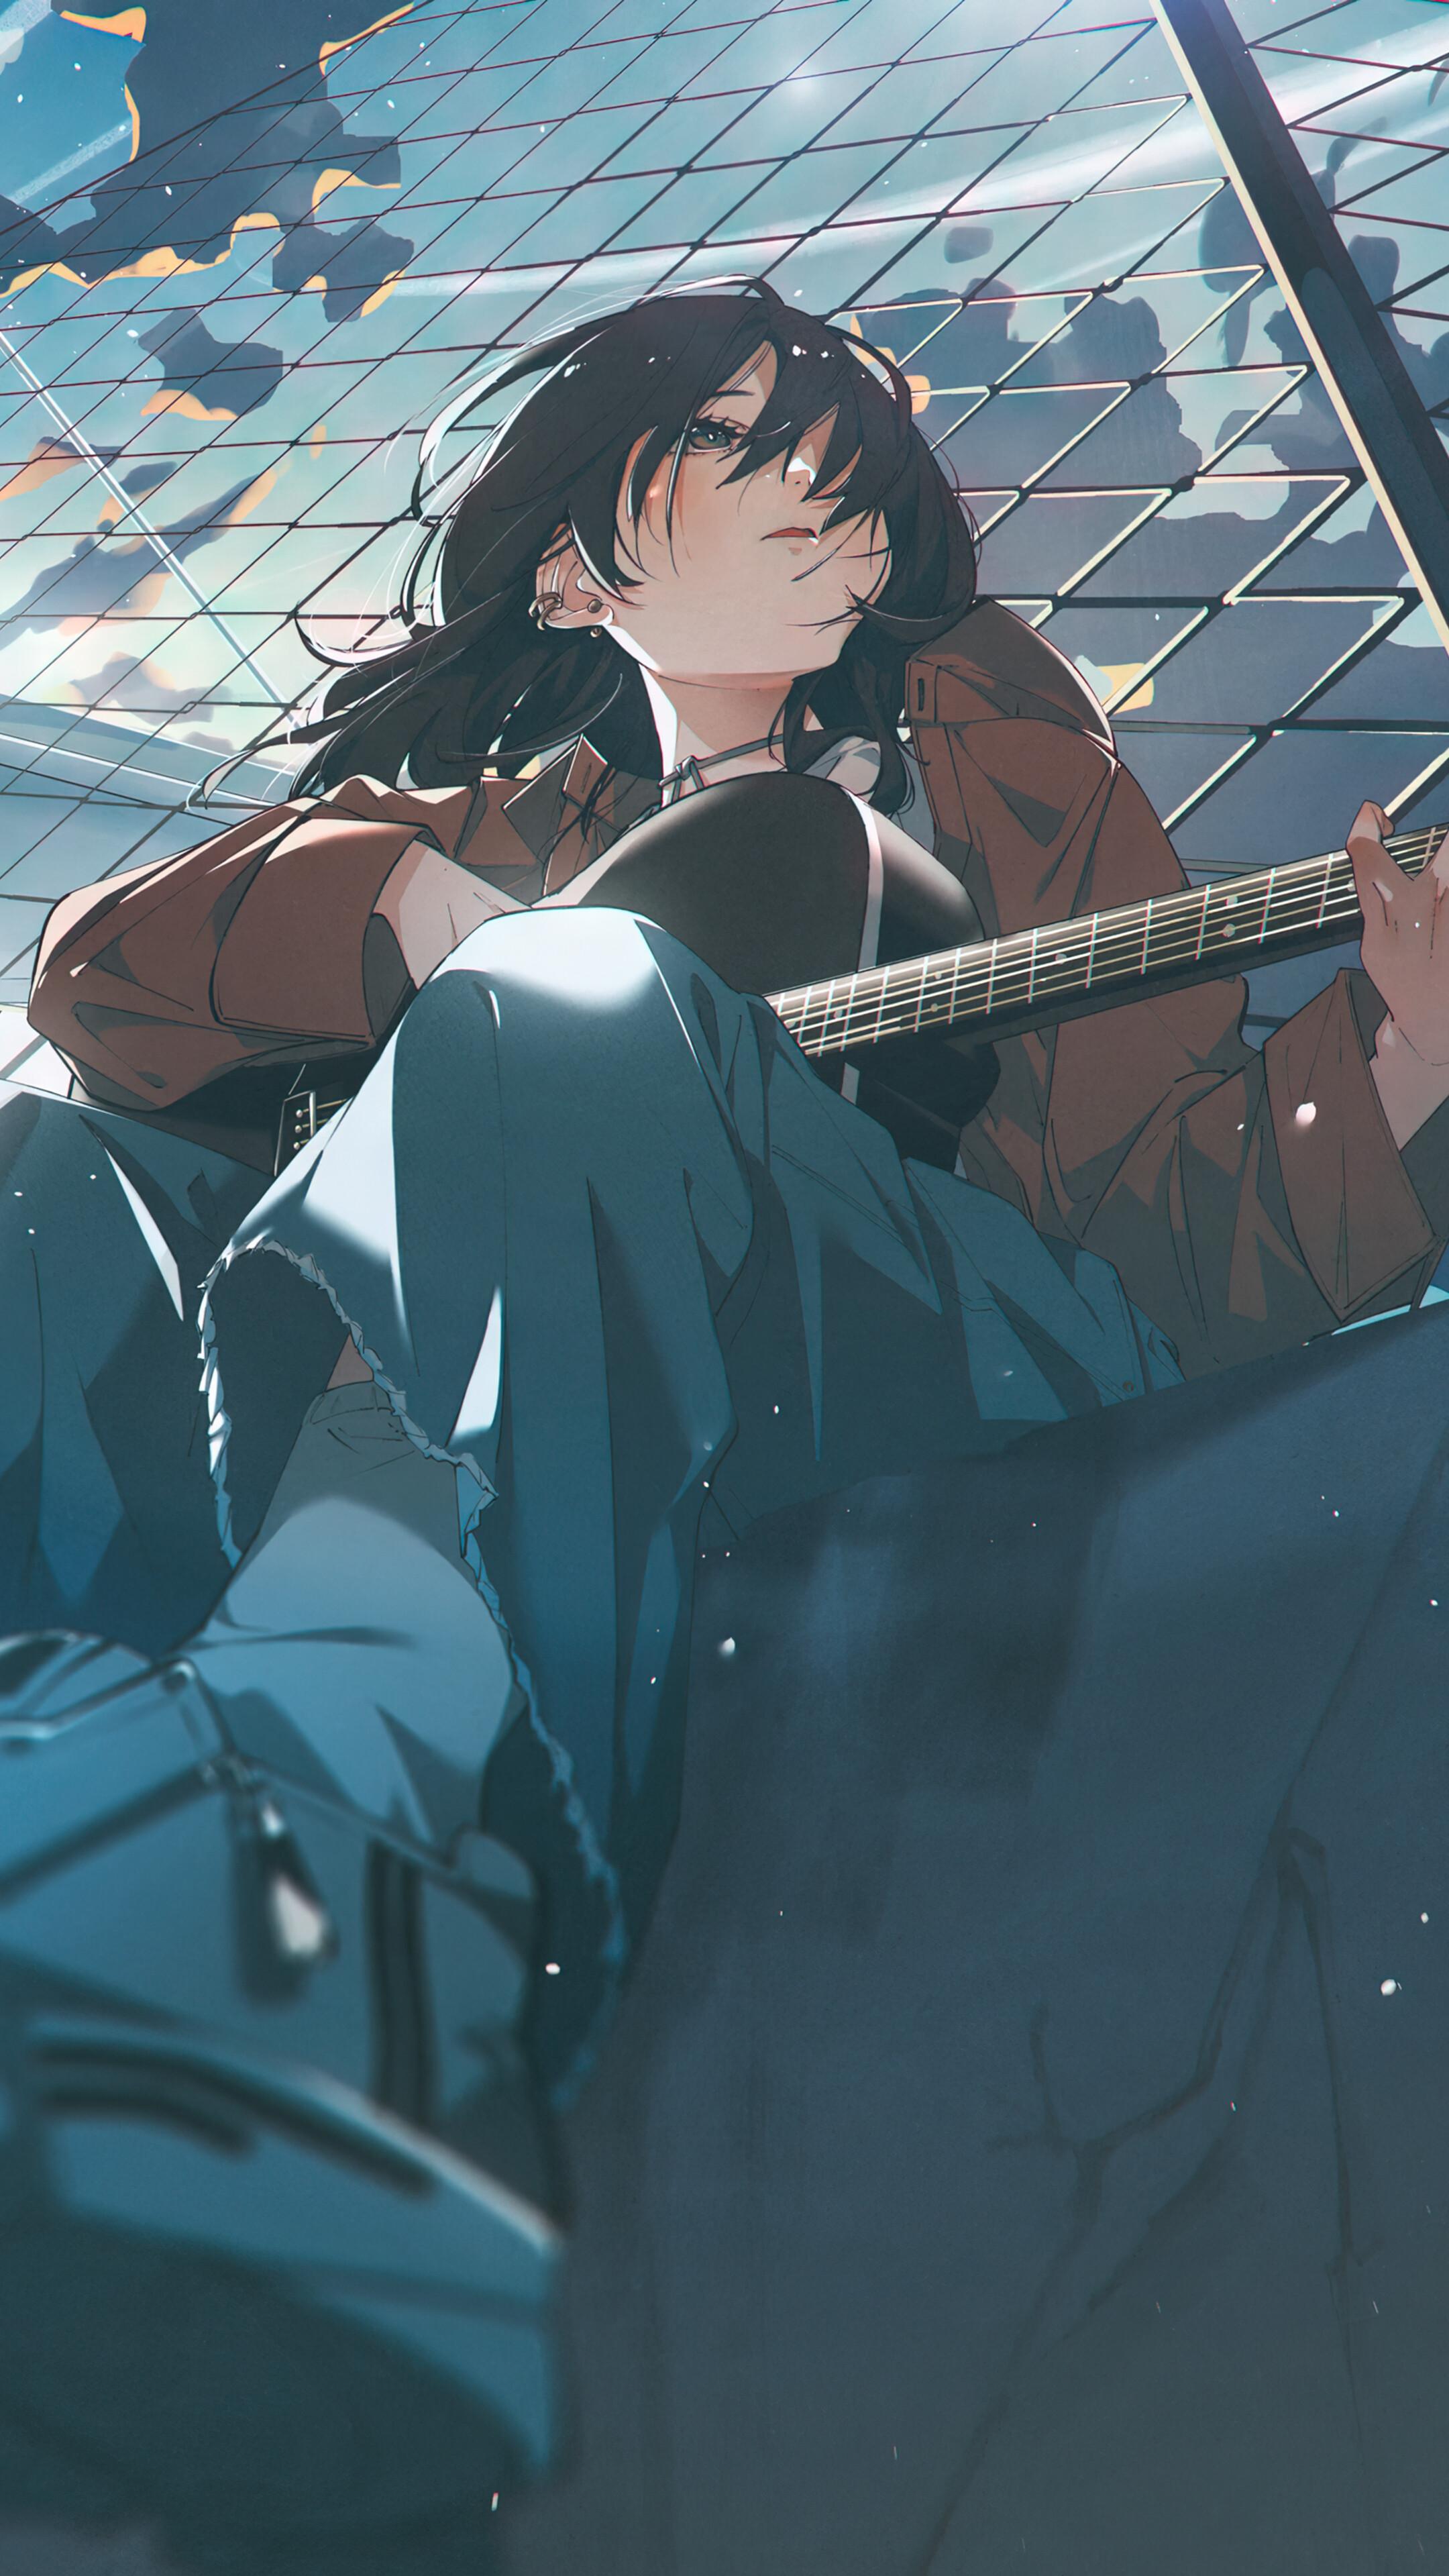 Anime Girl Playing Guitar 4k Wallpaper iPhone HD Phone 7920h